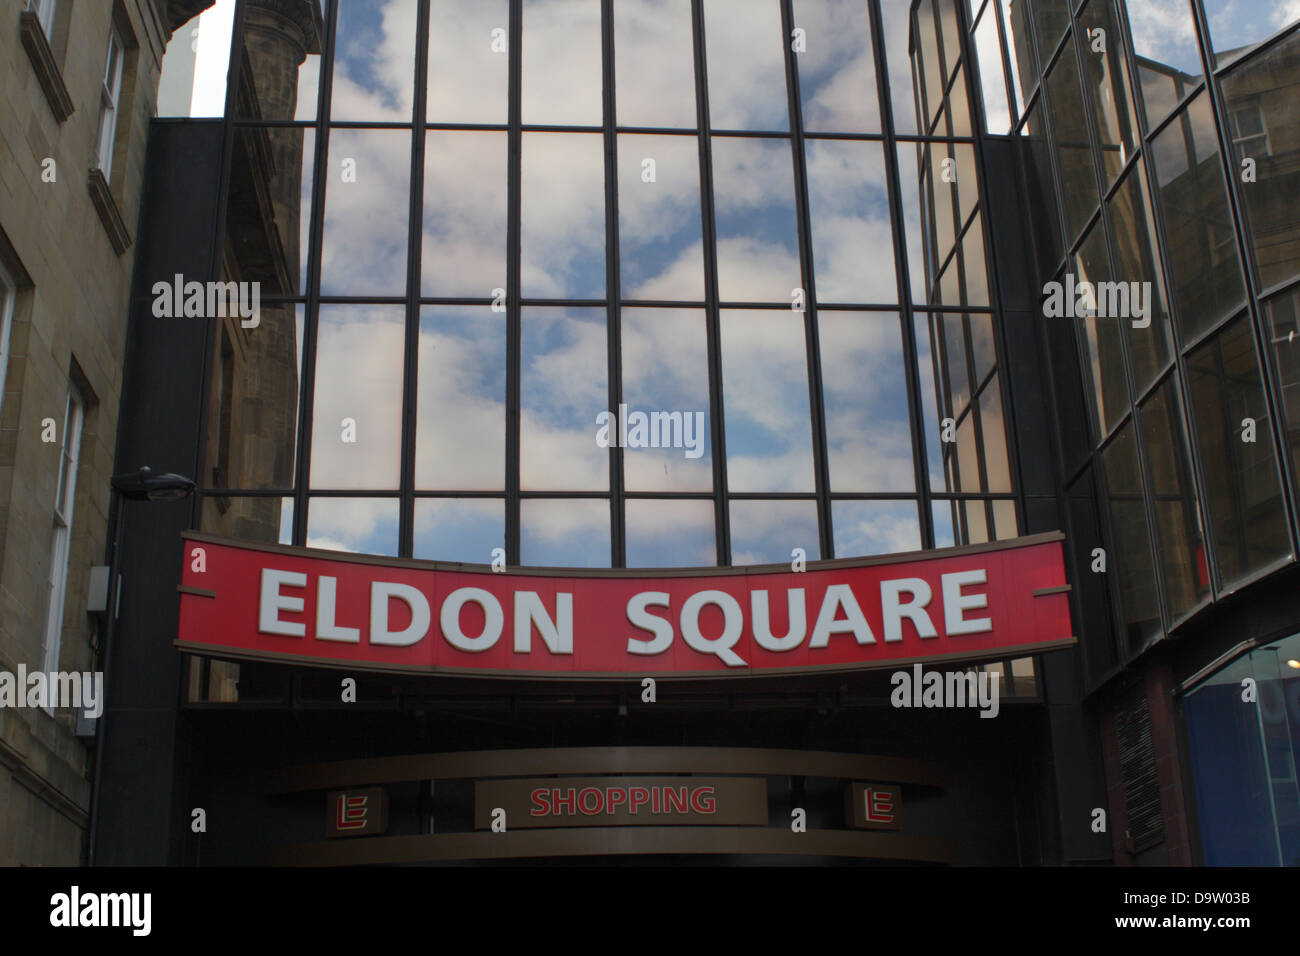 Eldon Square shopping precint entrance sign, below multiple glass windows. Stock Photo